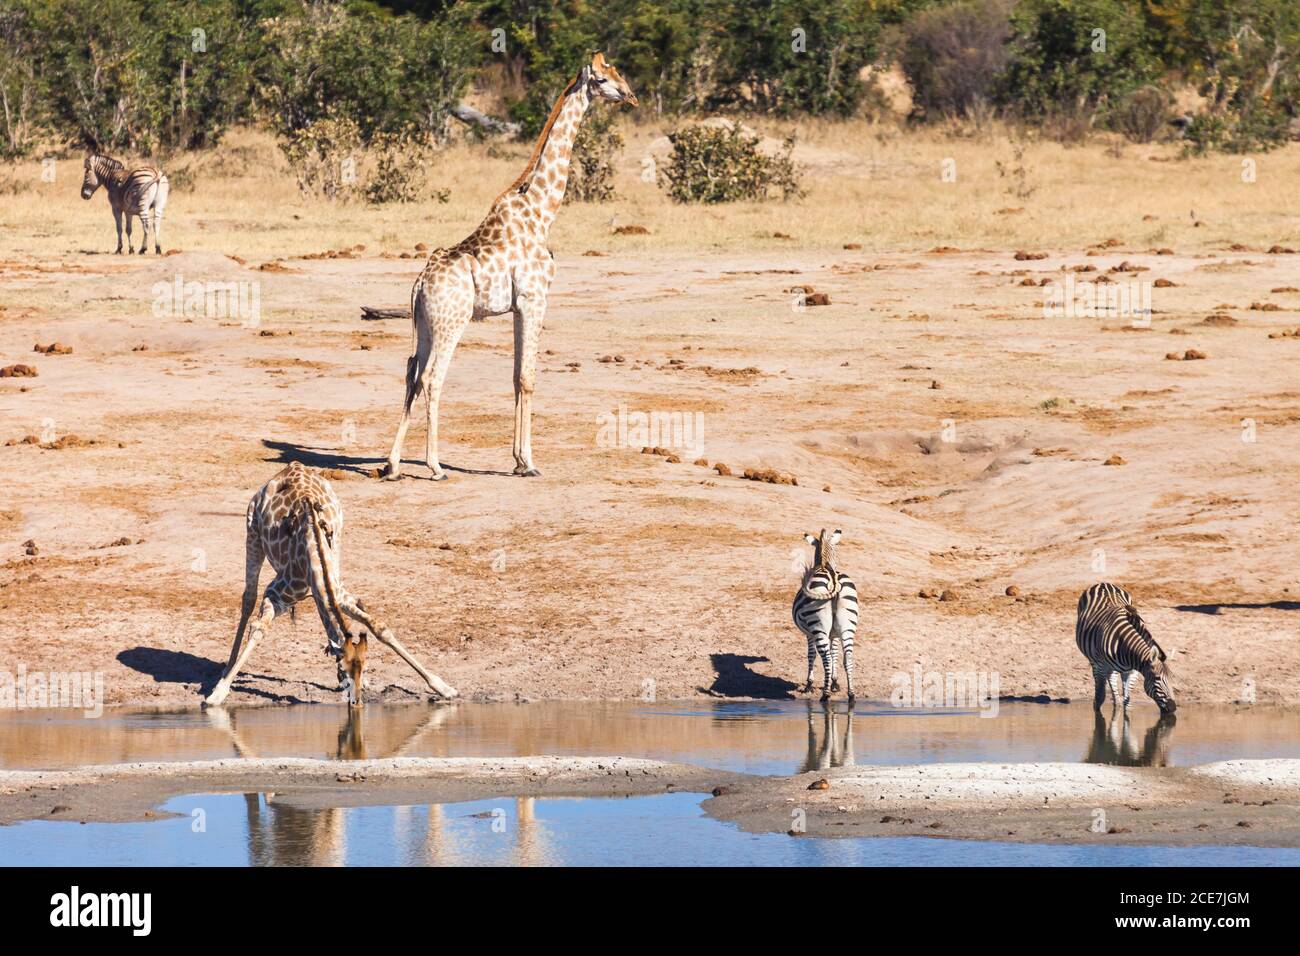 Giraffes and Zebras drinking and watching at water hole, Hwange National Park, Matabeleland North, Zimbabwe, Africa Stock Photo